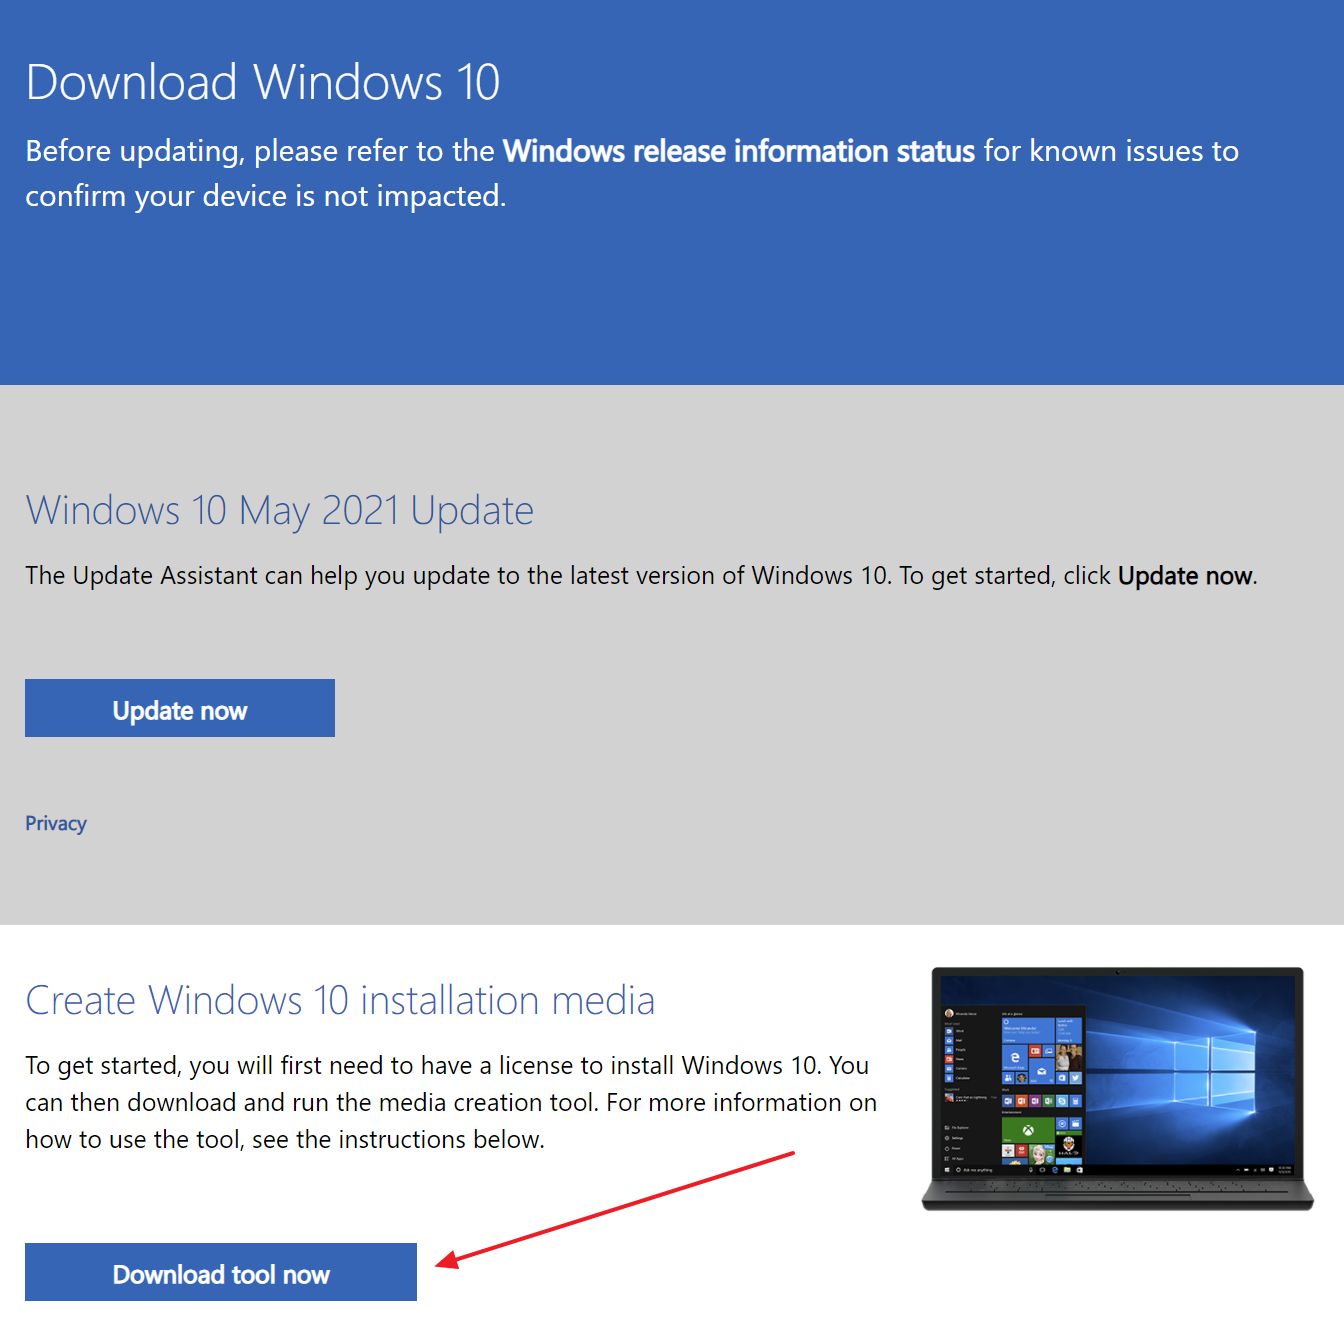 Download Windows 10 official microsoft website - BinaryFork.com